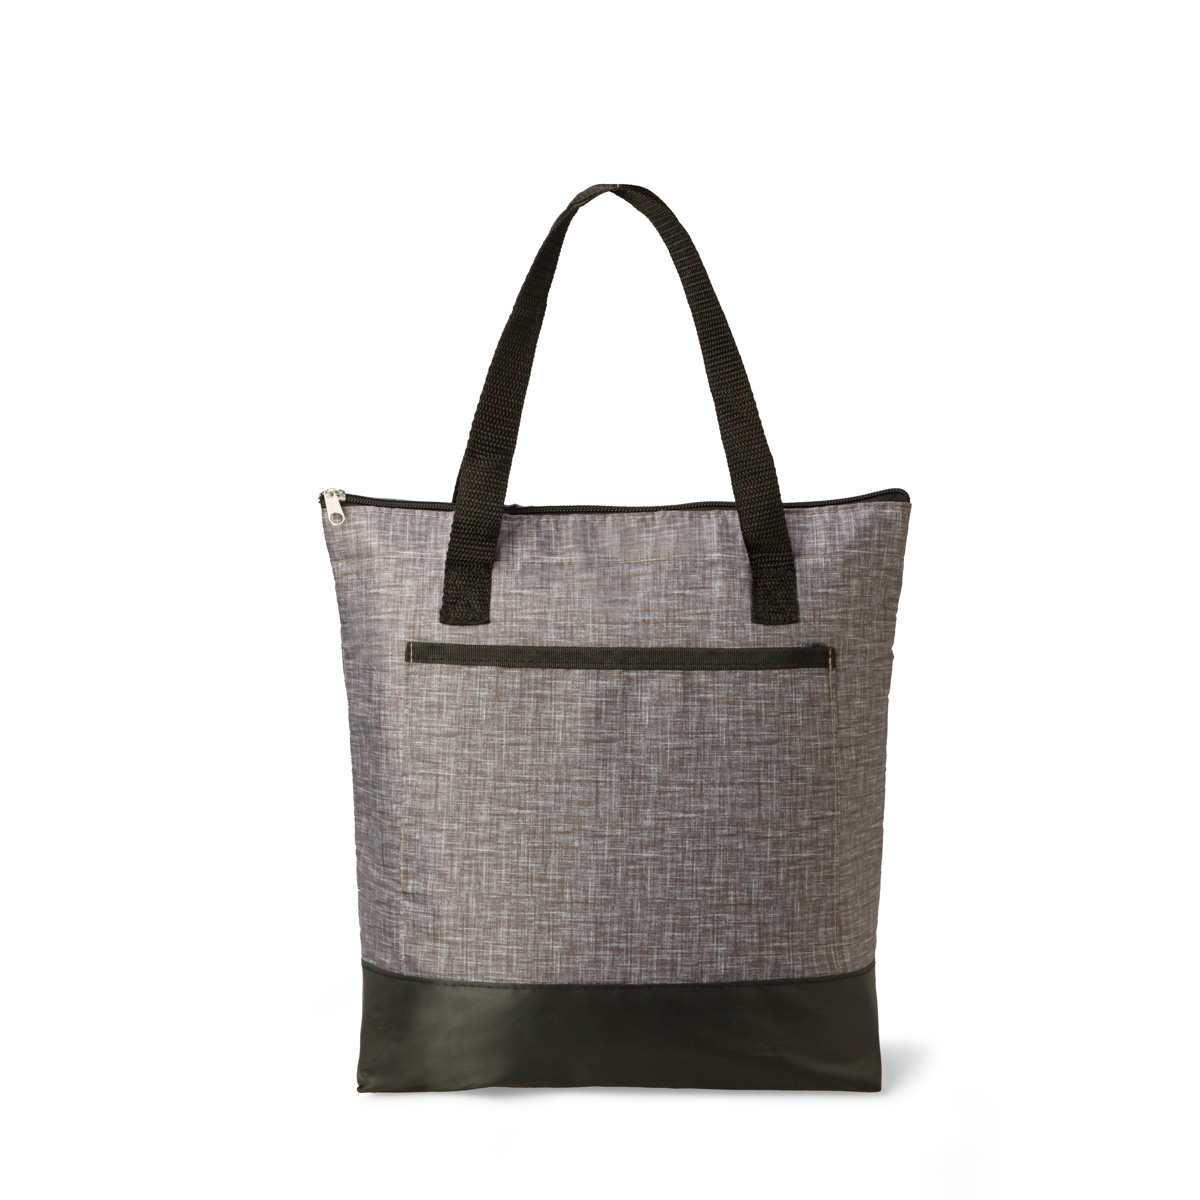 Garten Cooler Bag Product Image